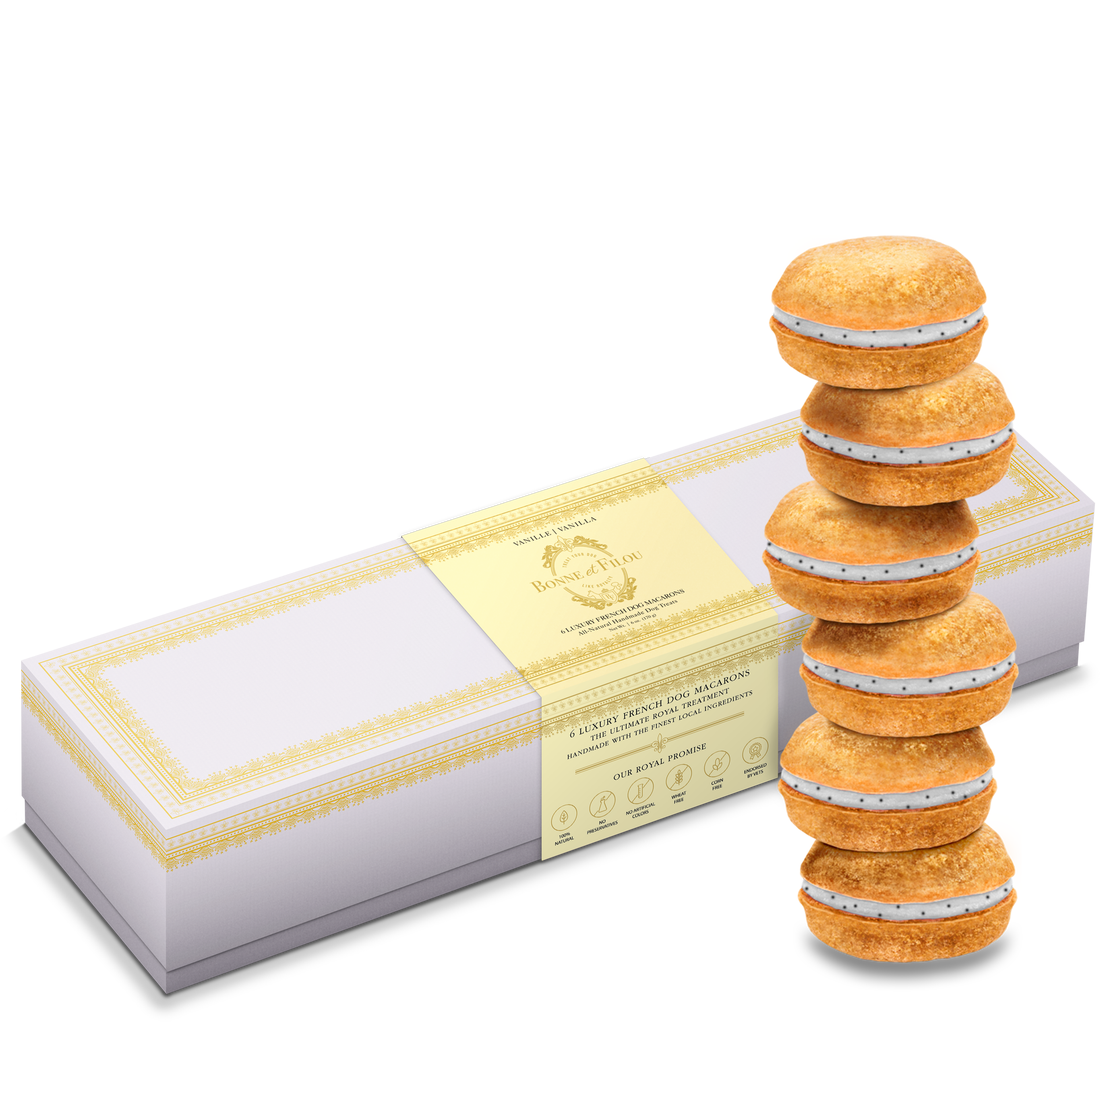 French Vanilla Macaron Box of 6 - Backordered